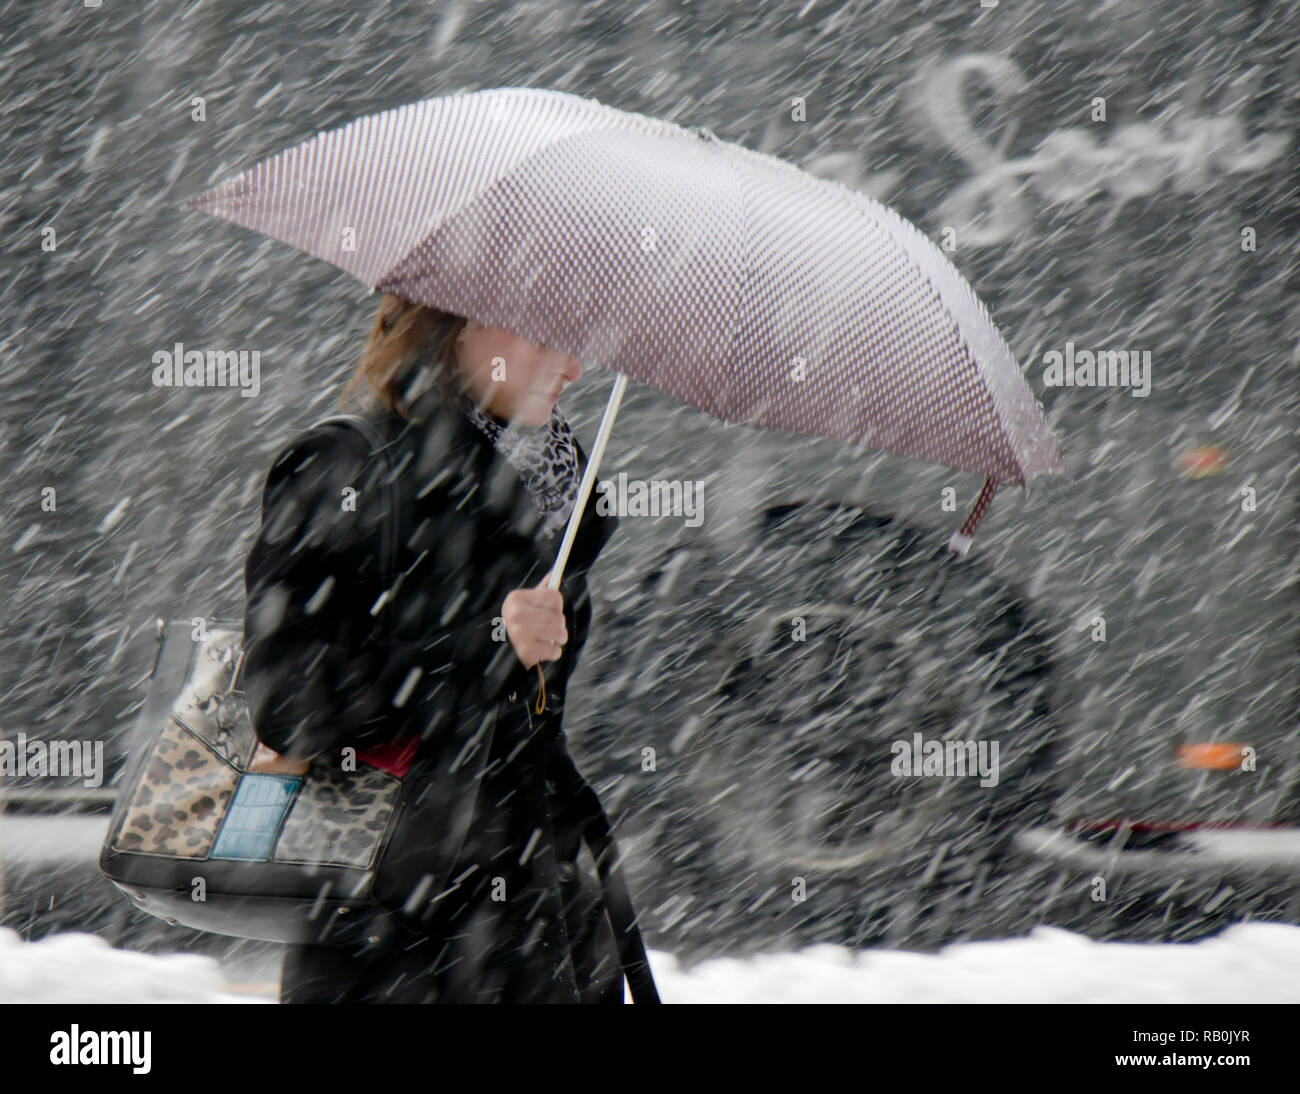 Belgrade, Serbia - December 15, 2016: One young elegant woman walking alone under umbrella in heavy snowfall in city street Stock Photo